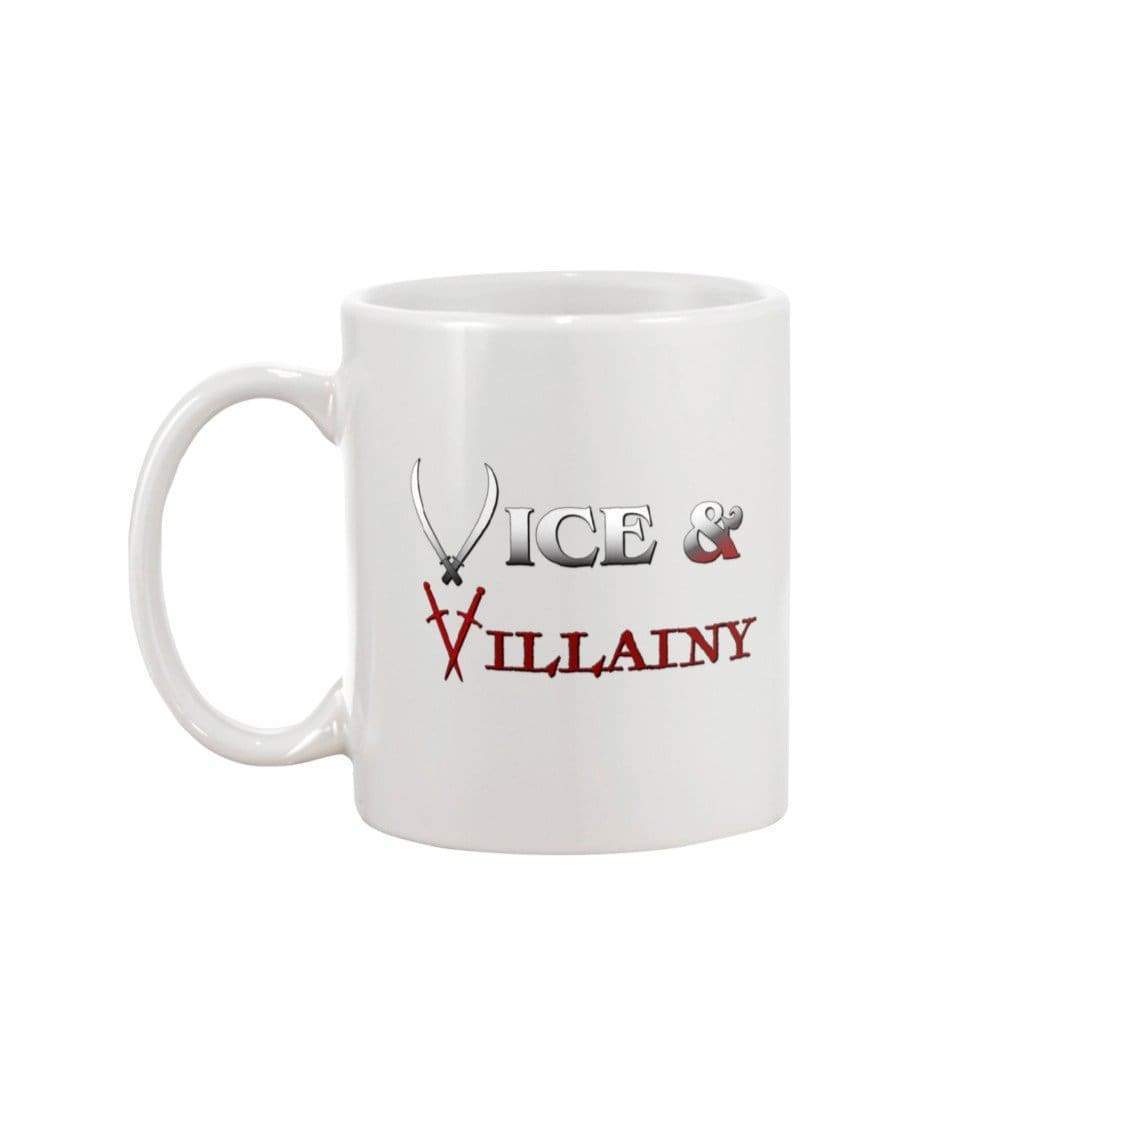 Vice & Villainy Text Logo 15oz Coffee Mug - Mugs